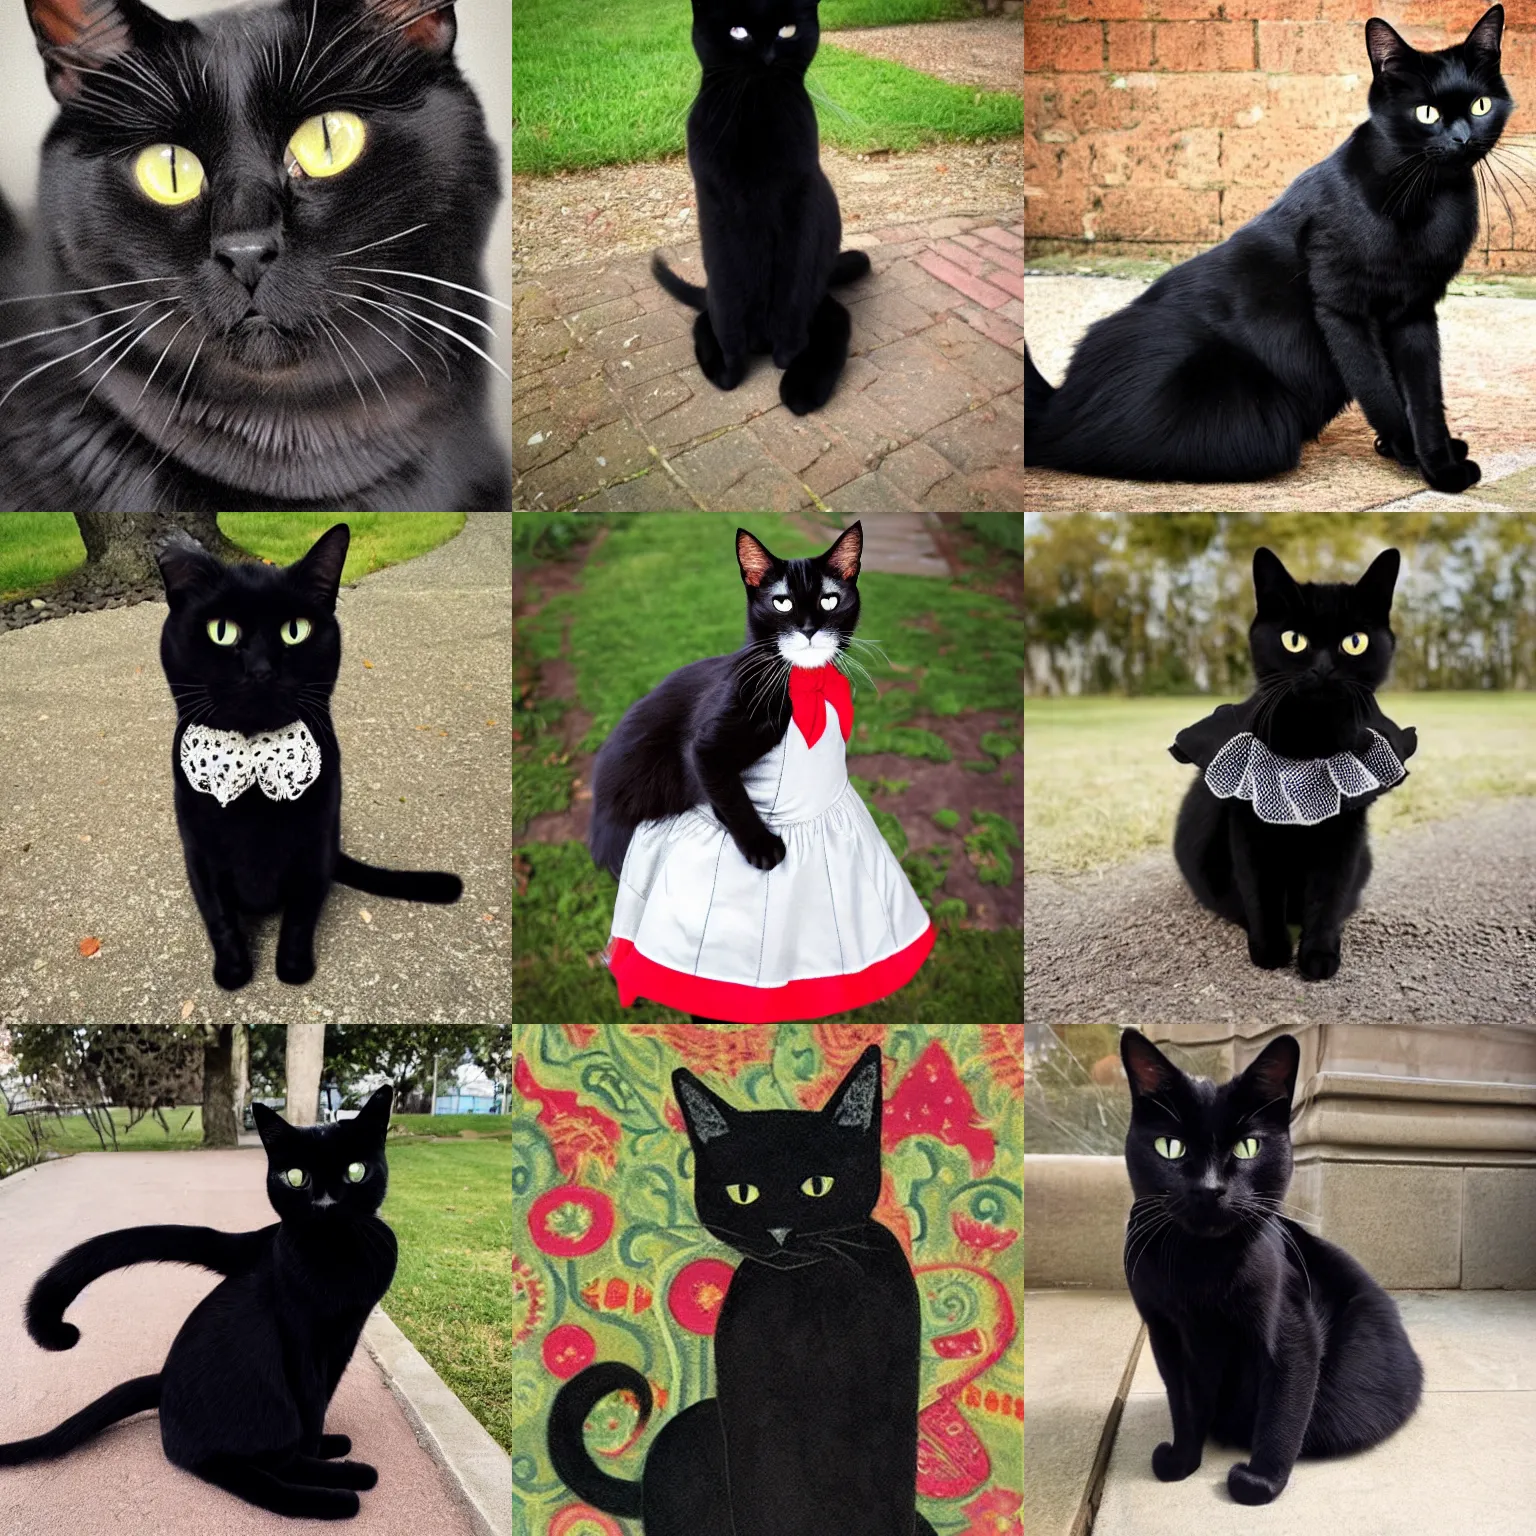 Prompt: a black cat wearing a dress